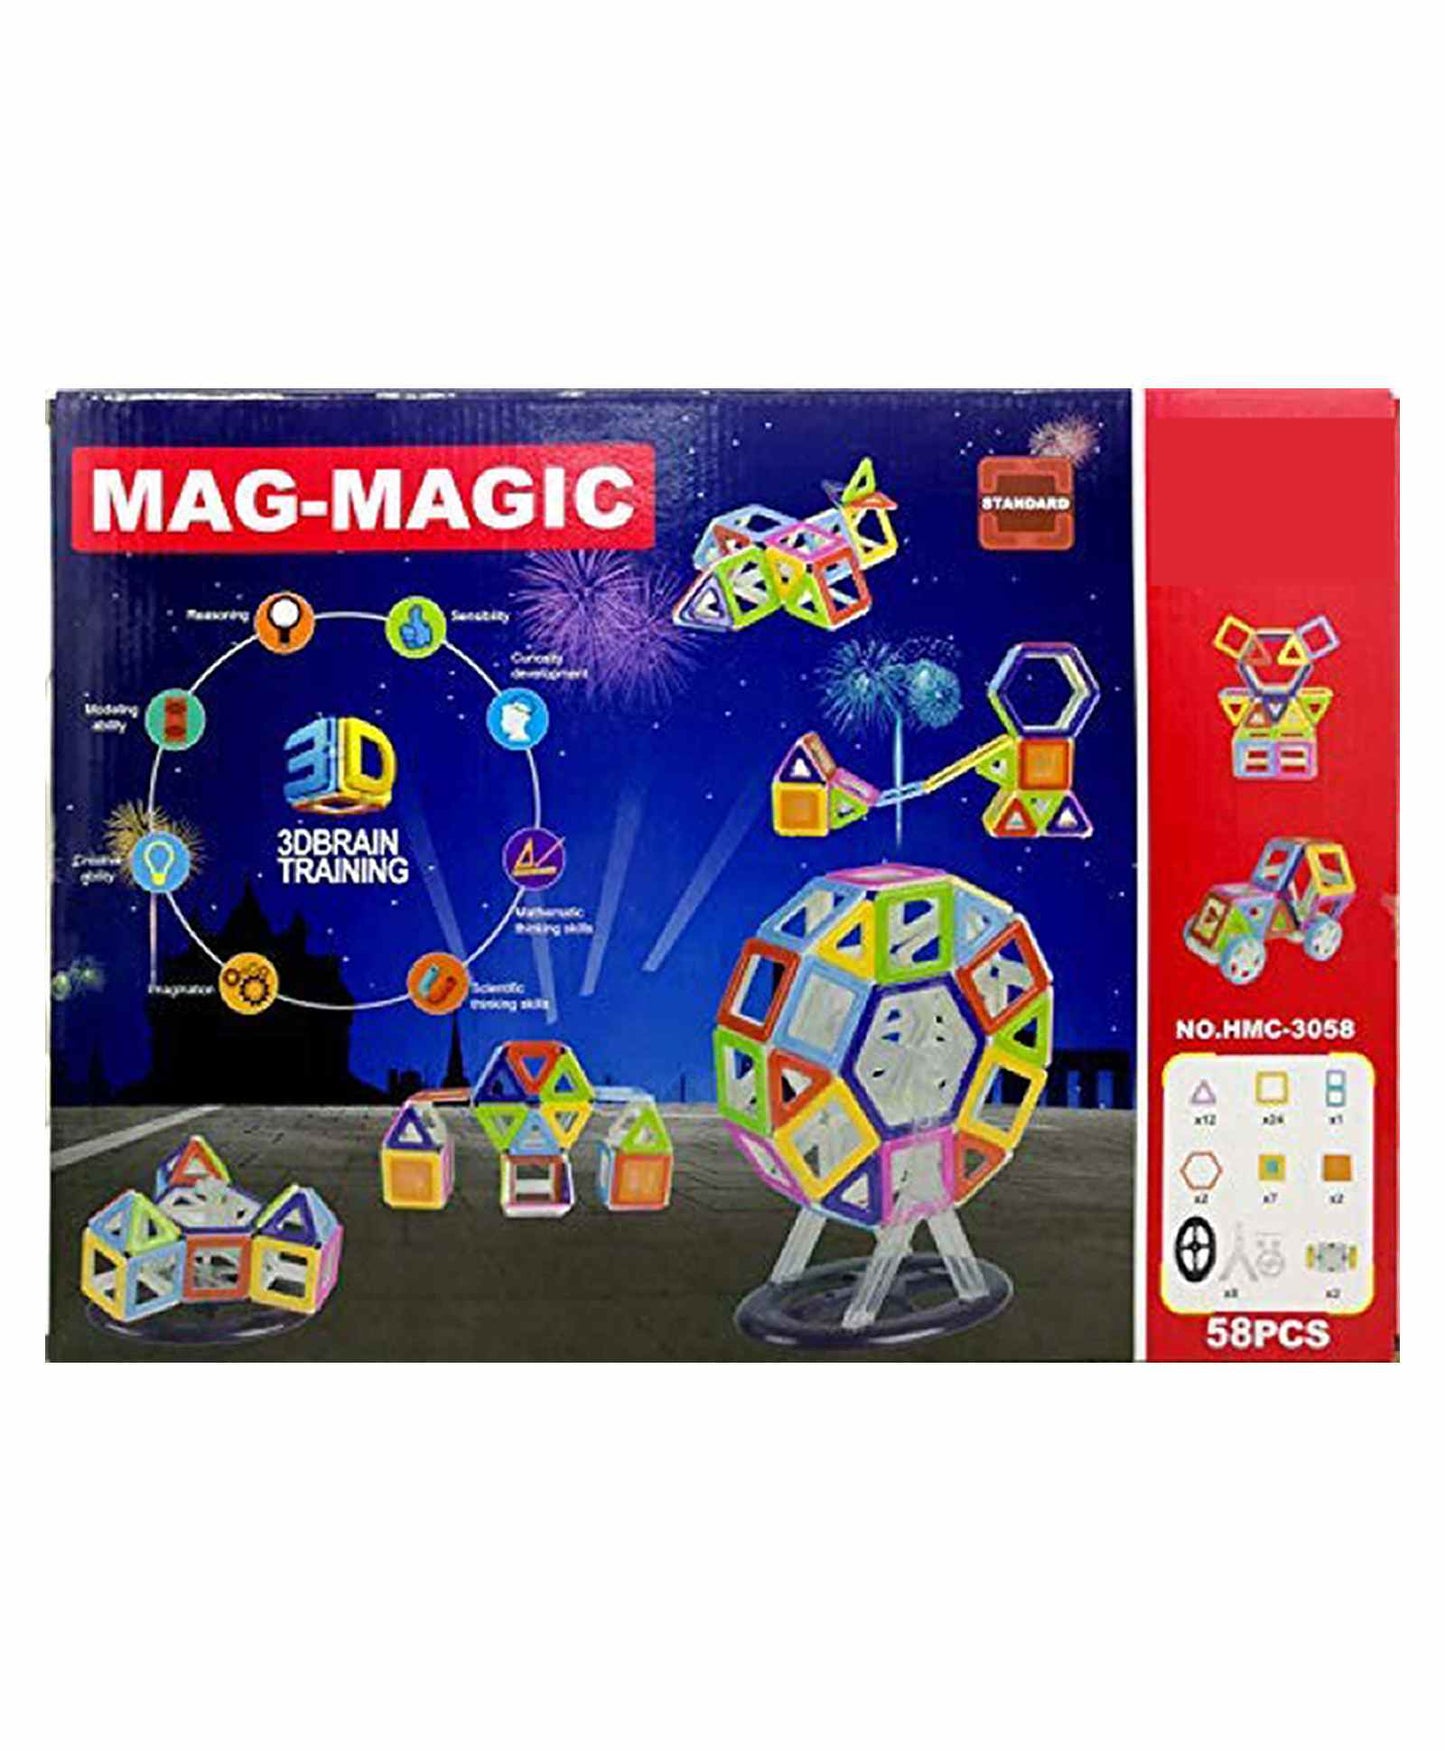 AZi 58 PCS MAG-Magic Creativity Theme Brain Development Magnetic Game Educational 3D Blocks Set Toy with Music & Light